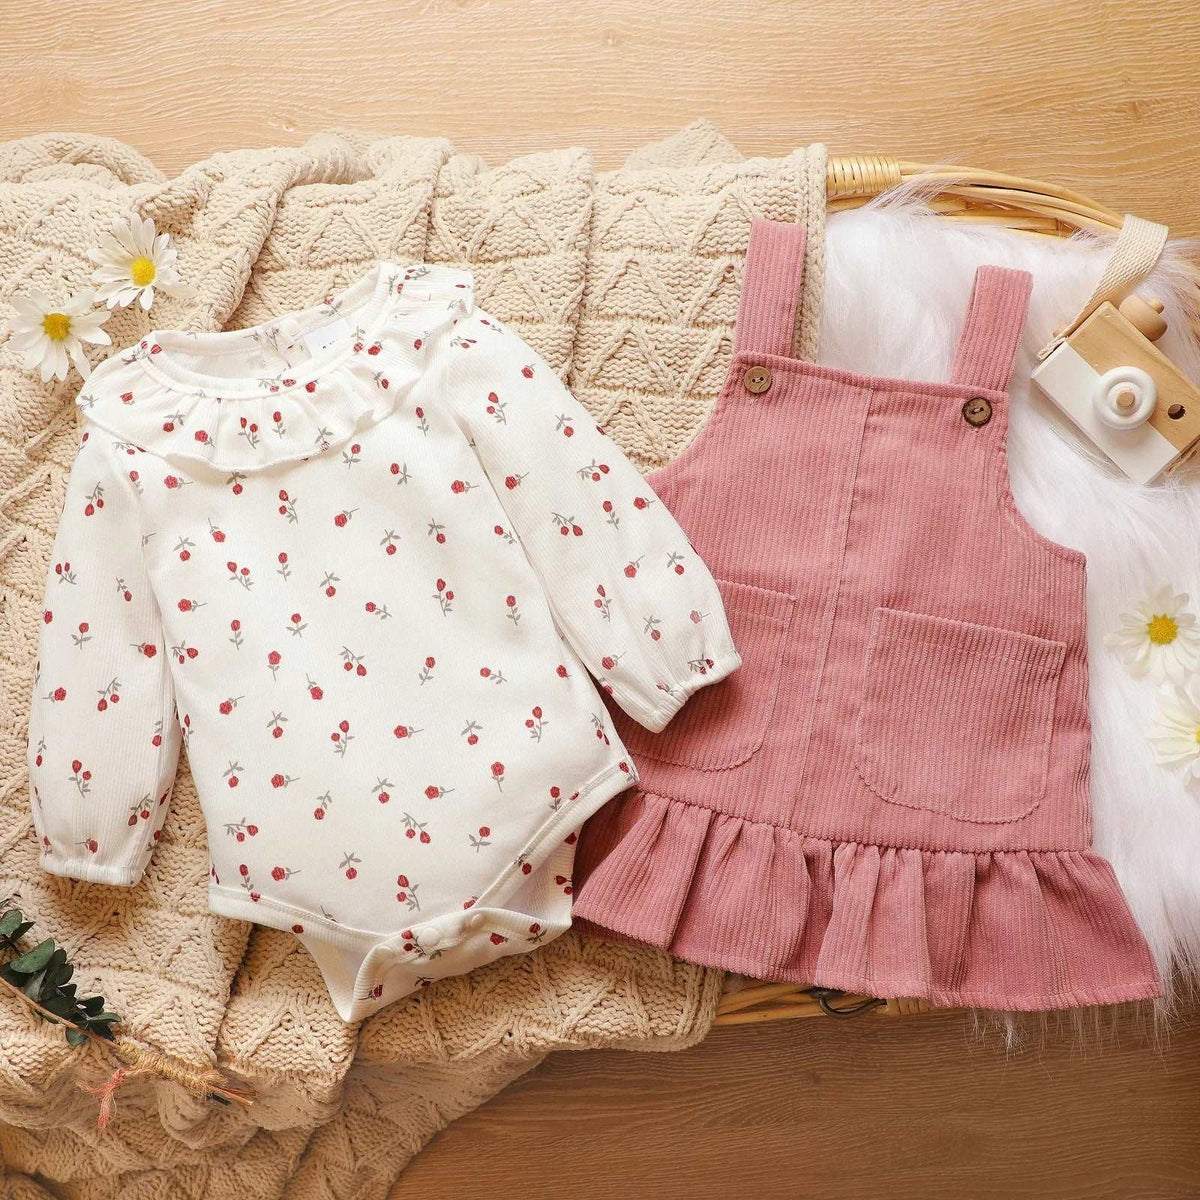 Floral Print Velvet Baby Romper and Dress - For all baby